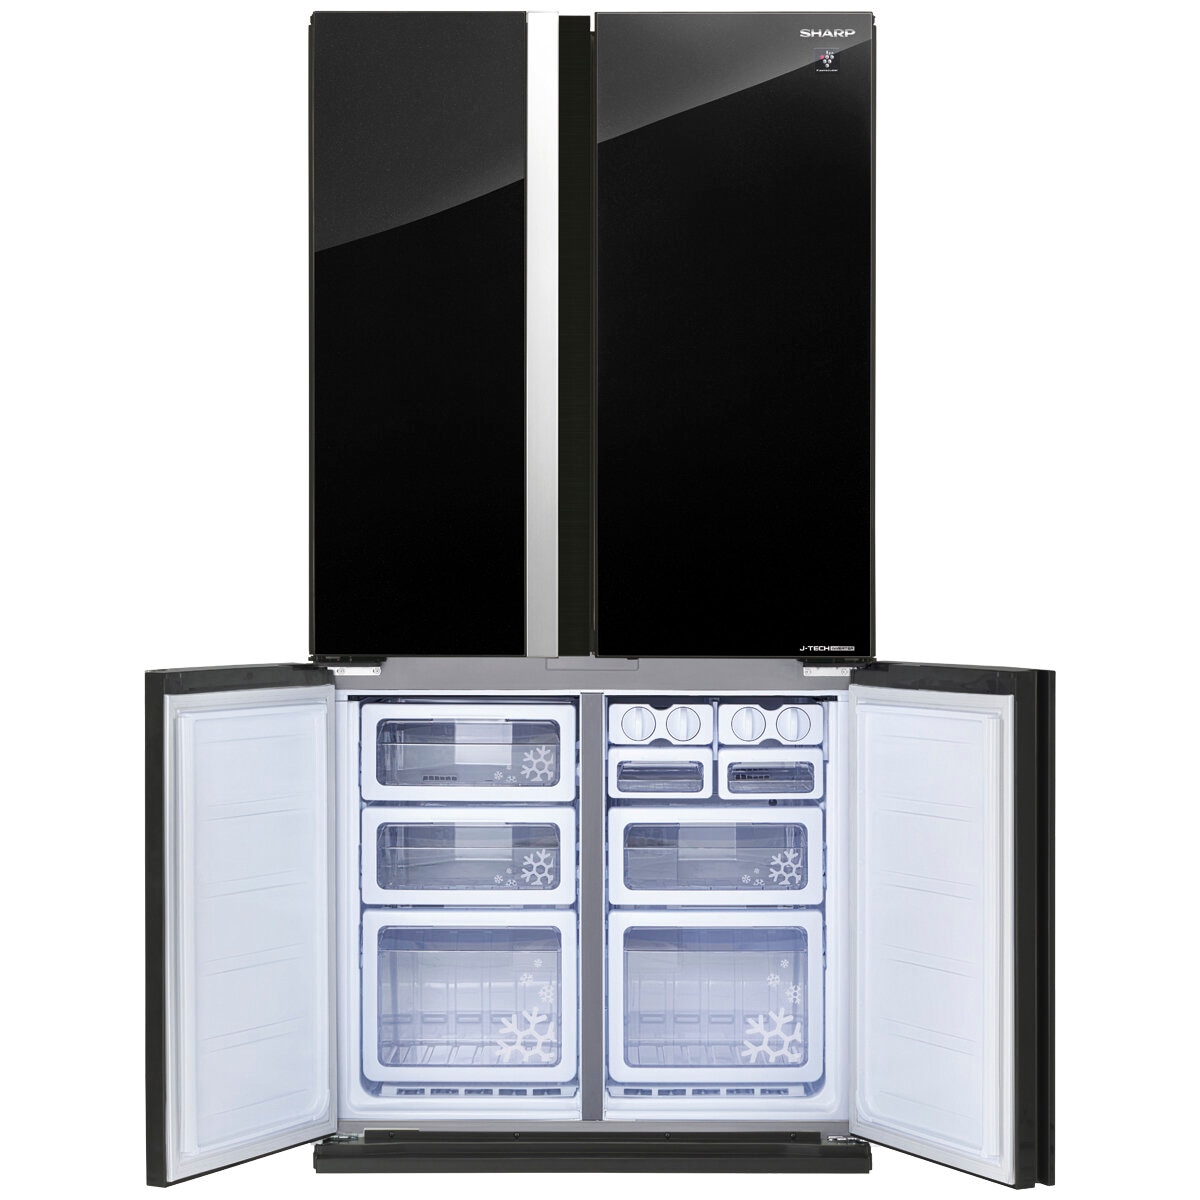 Sharp 676L French Door Black Refrigerator SJ-XP676FG-BK